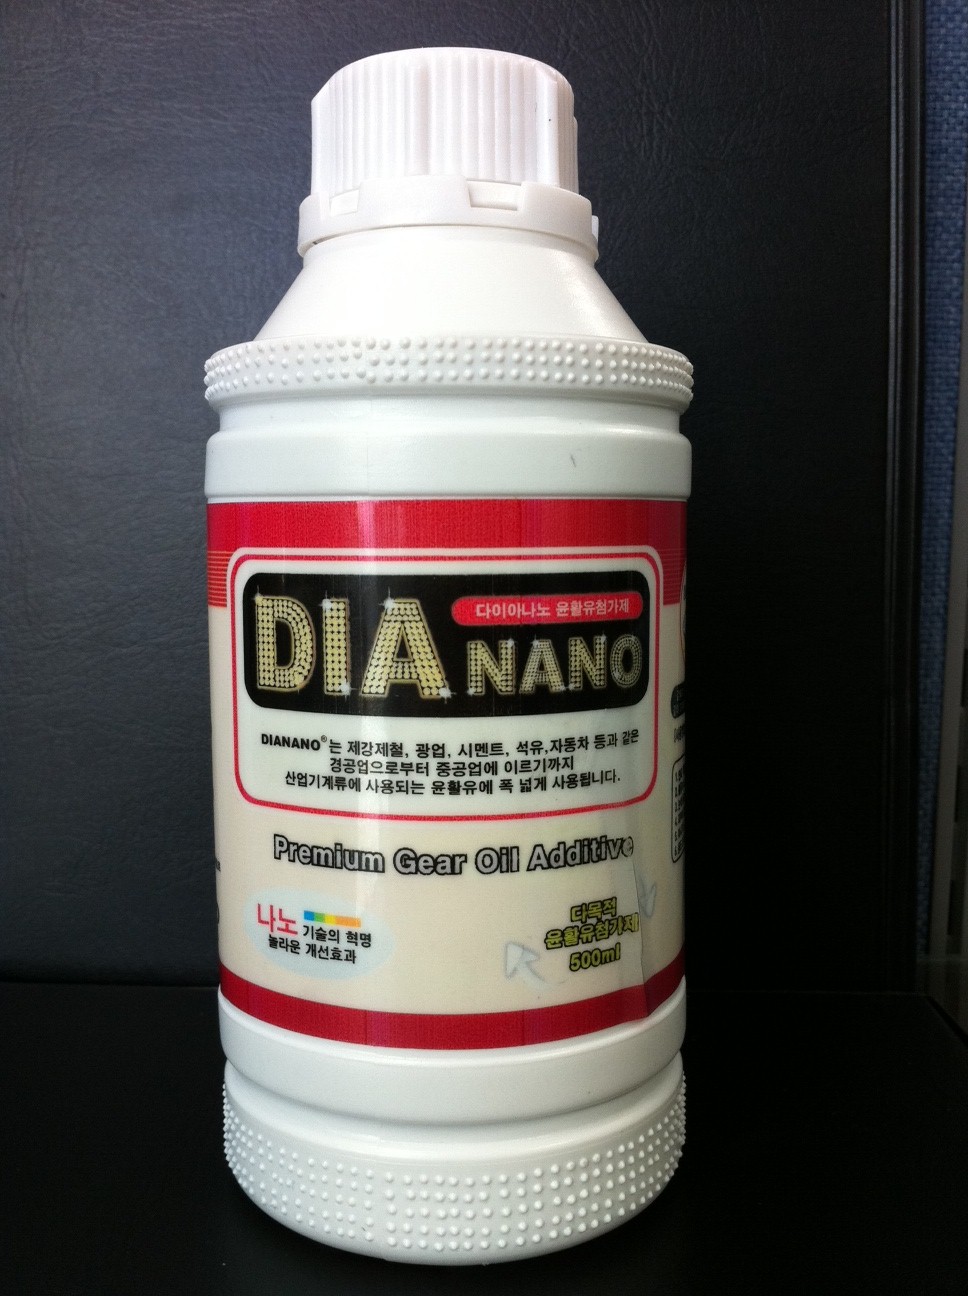 DIANANO,Maintenance & Energy Saving Gear O... Made in Korea